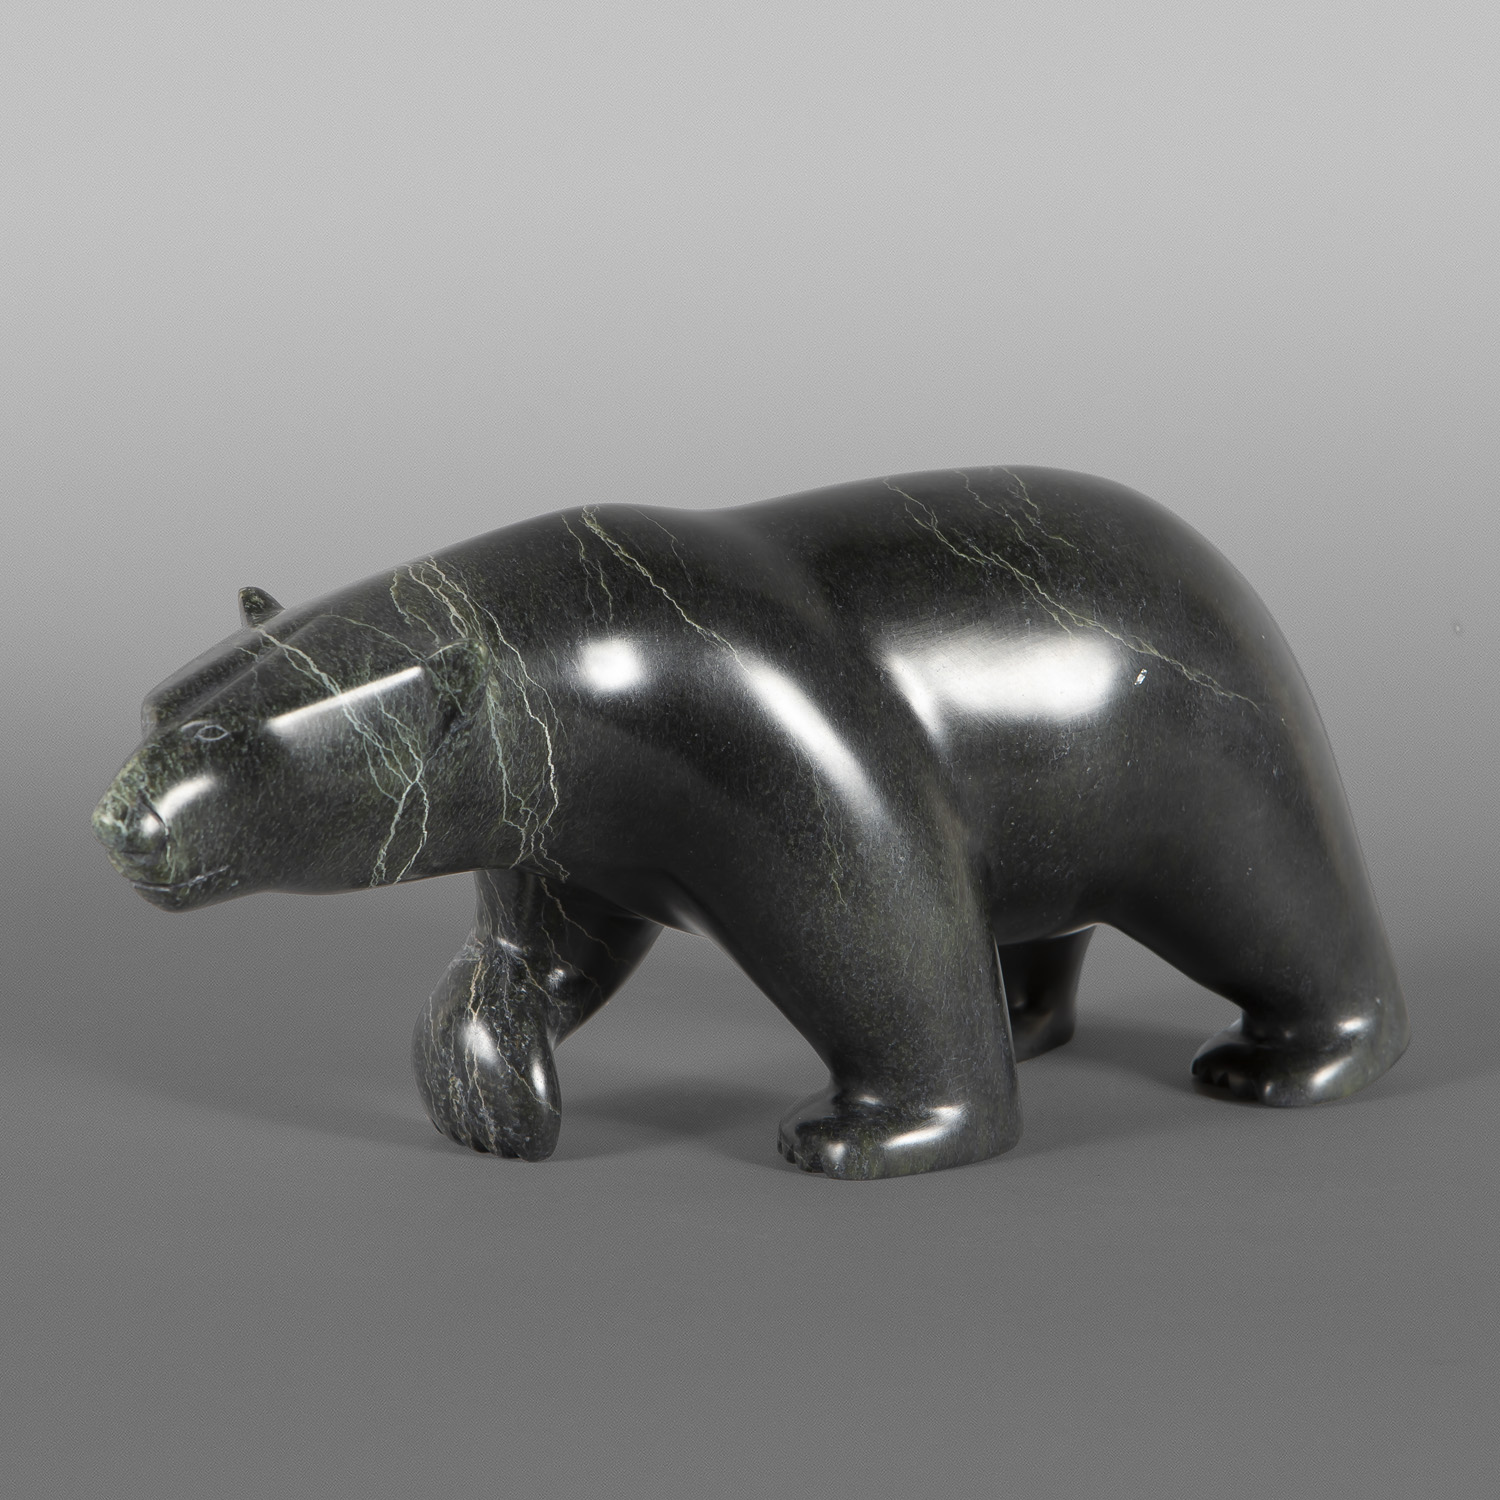 Walking Bear
Etidloie Adla
Inuit
Serpentine
11 ½” x 4” x 5”
$1400
